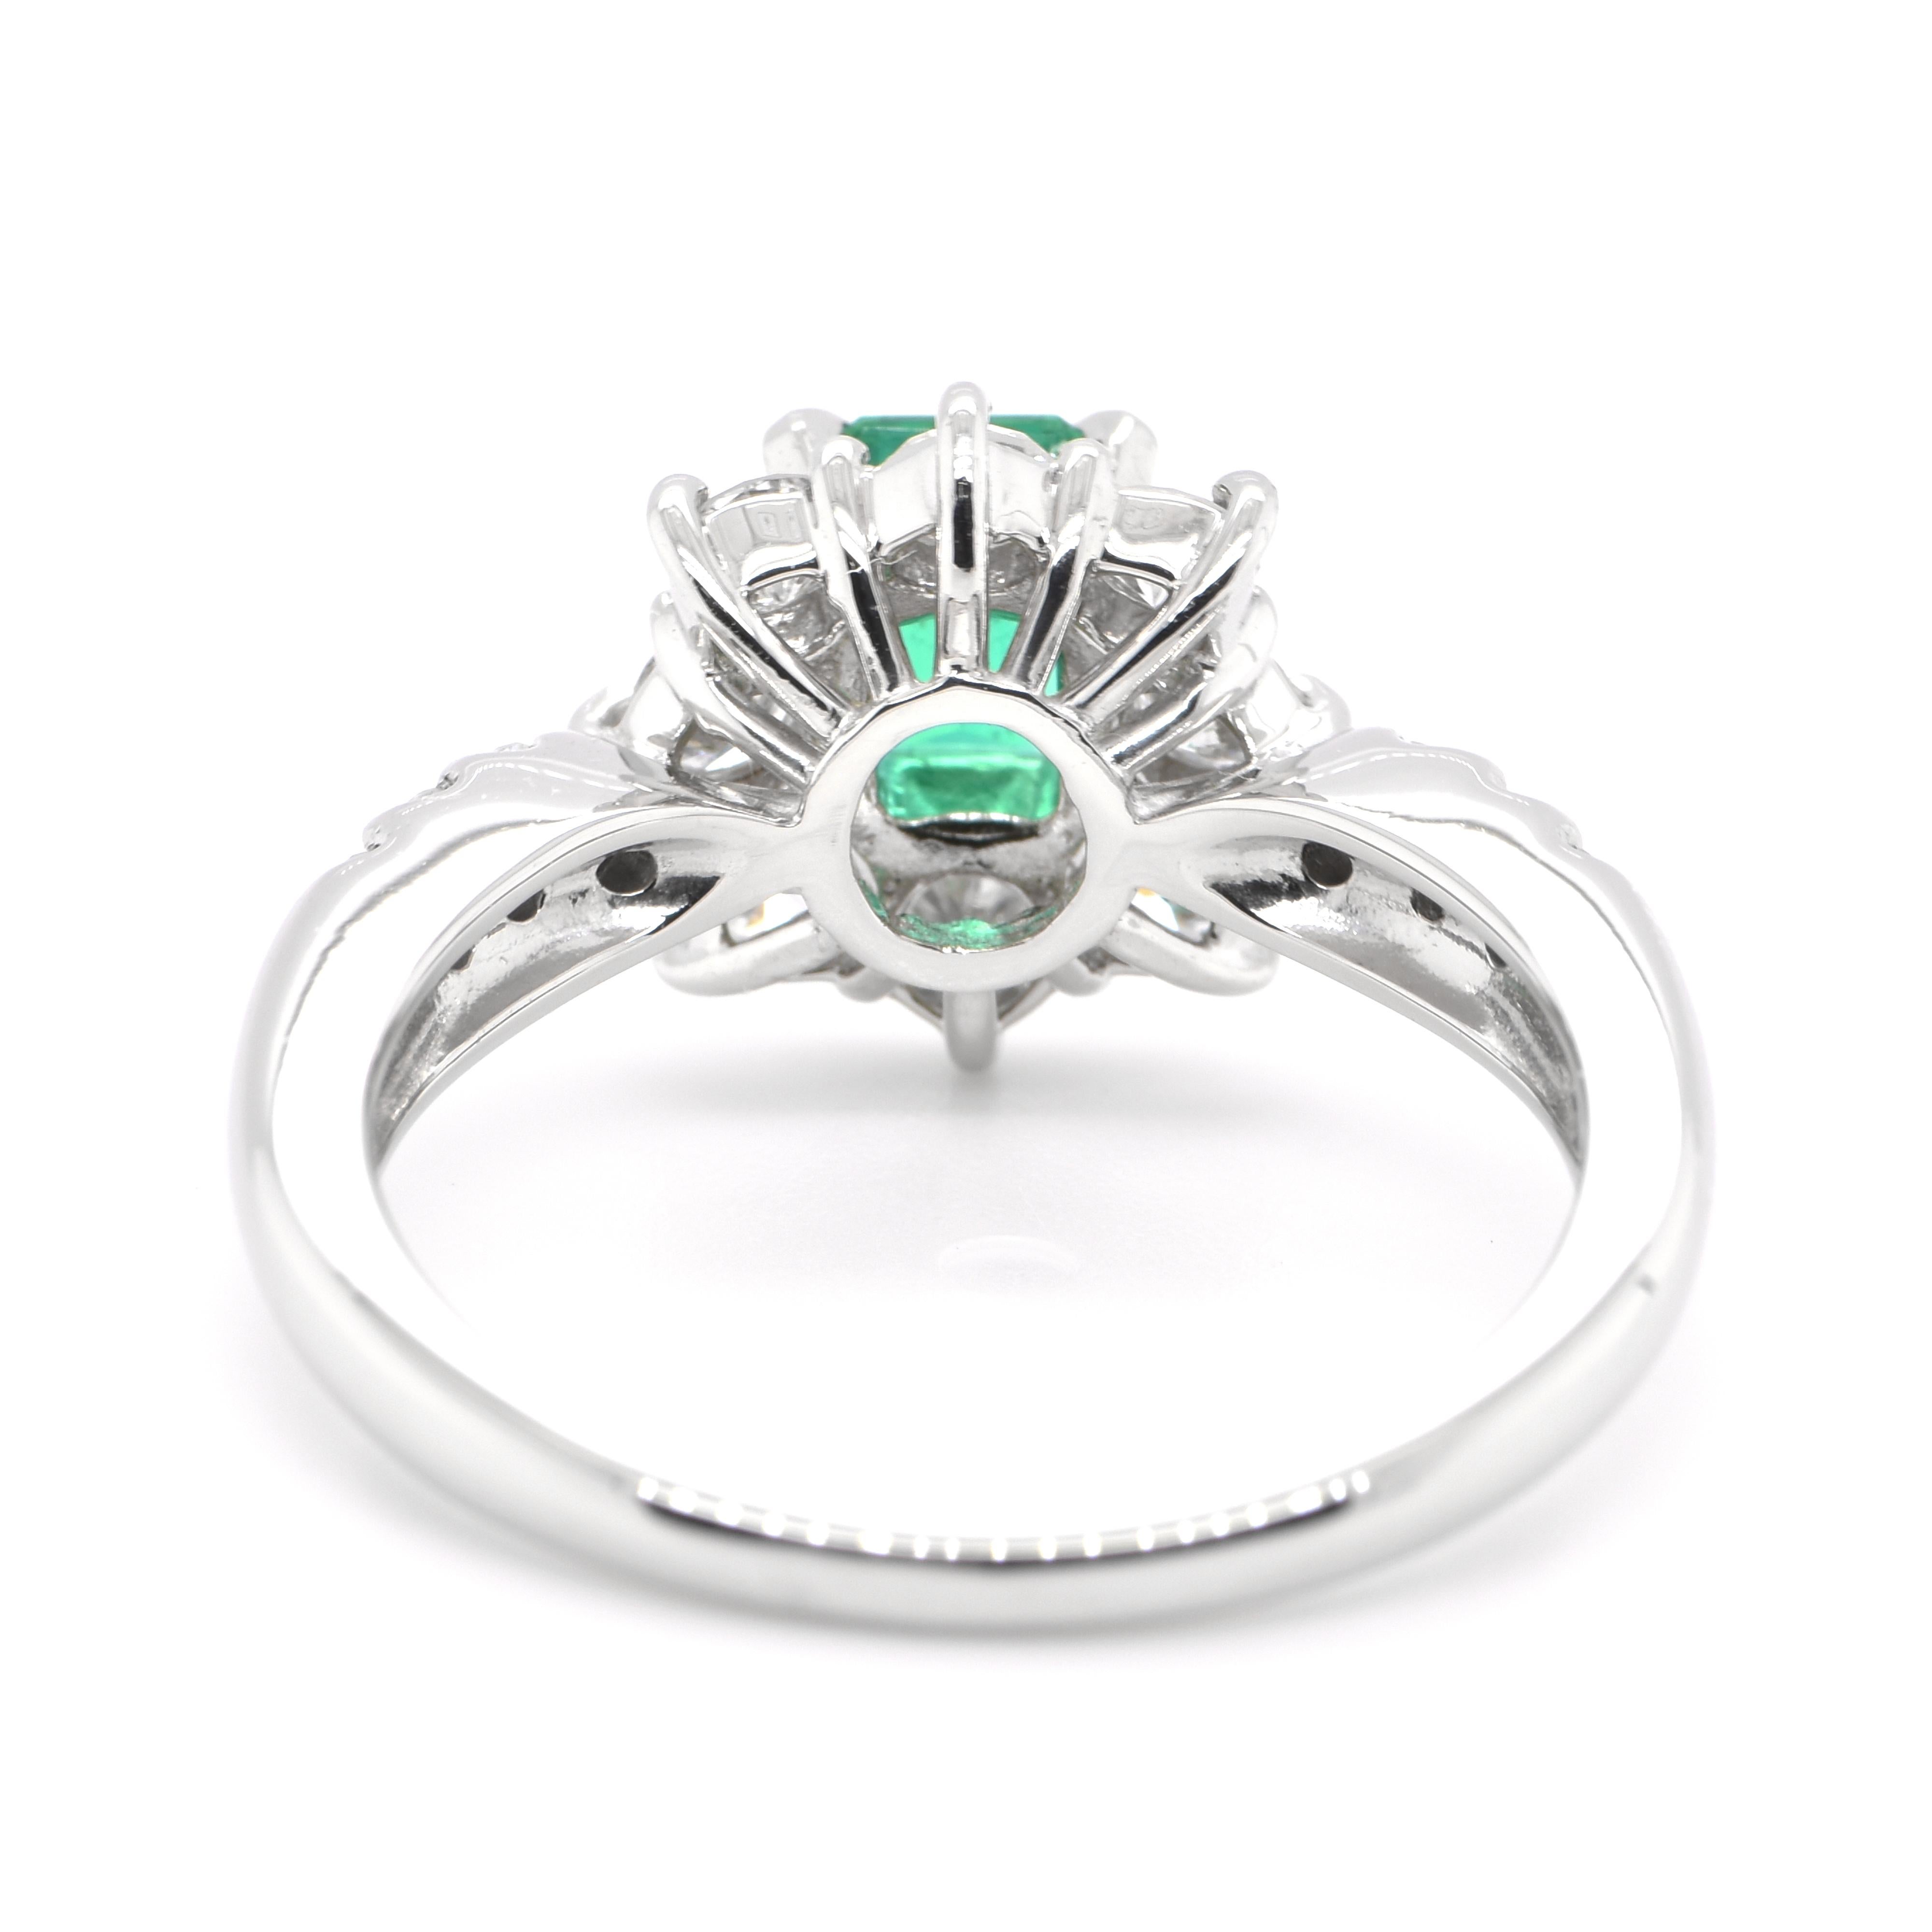 Women's 0.61 Carat Natural Emerald and Diamond Ring Set in Platinum